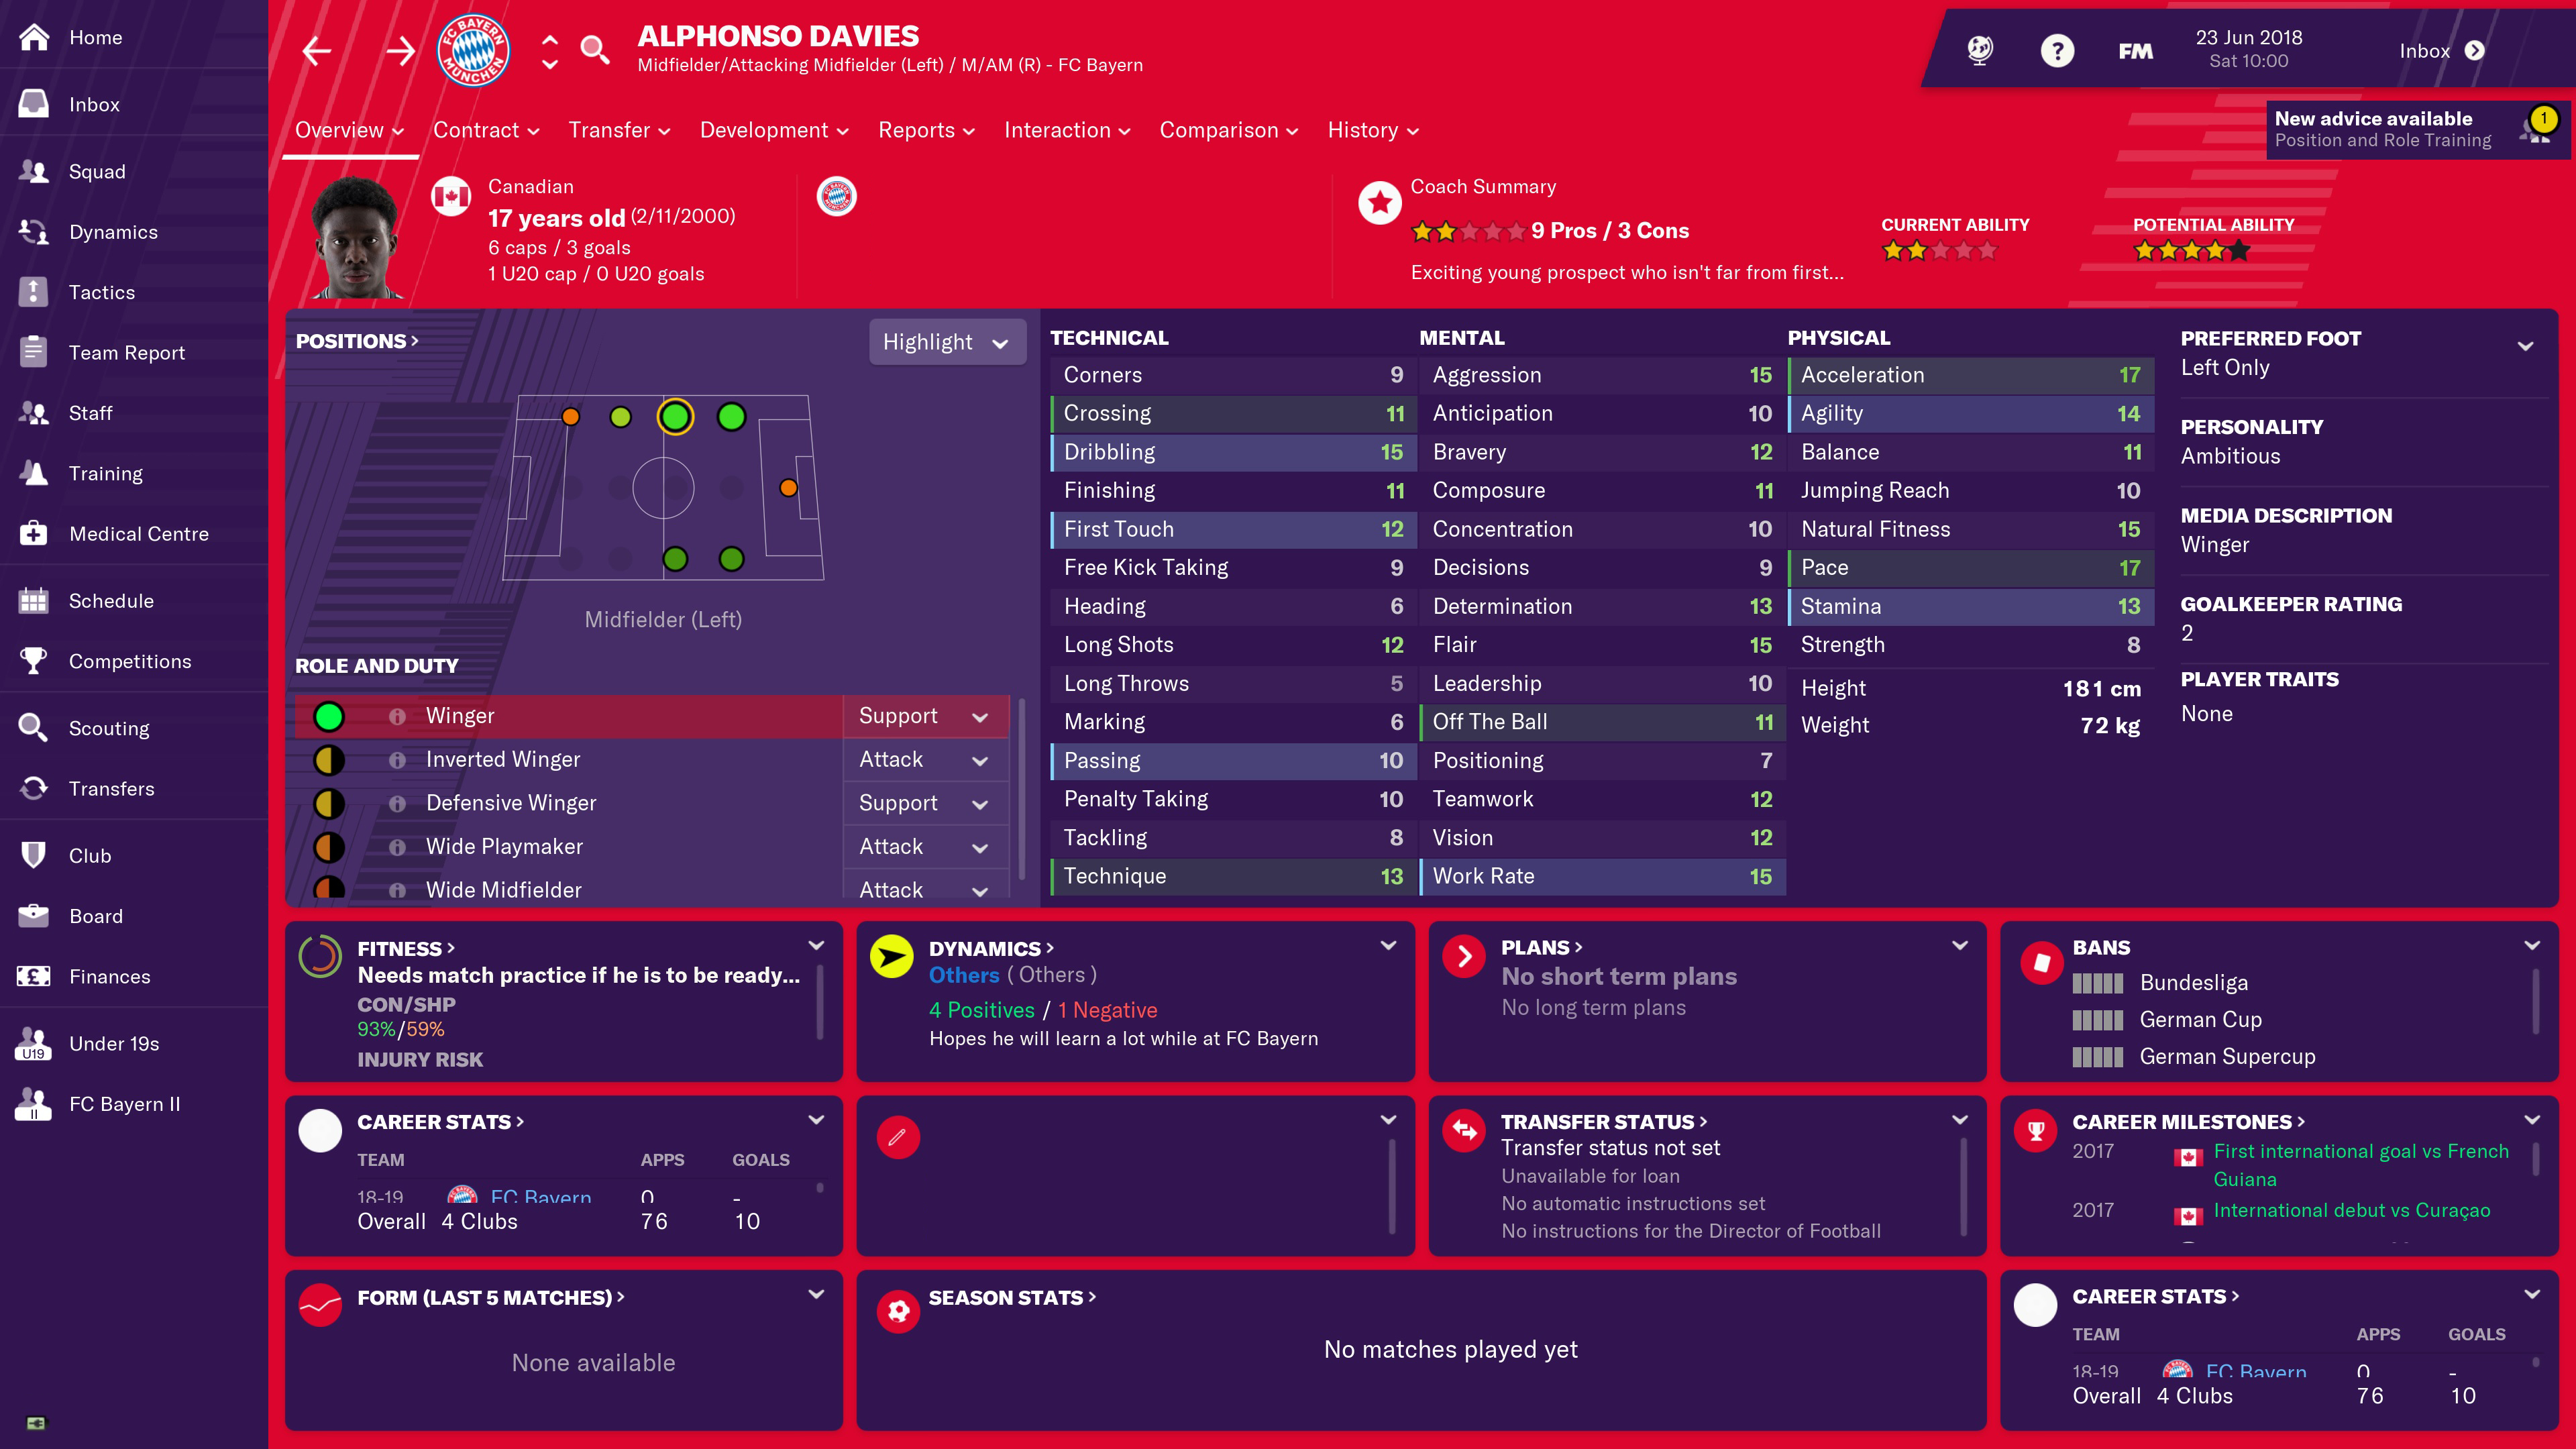 Alphonso Davies Player Profile